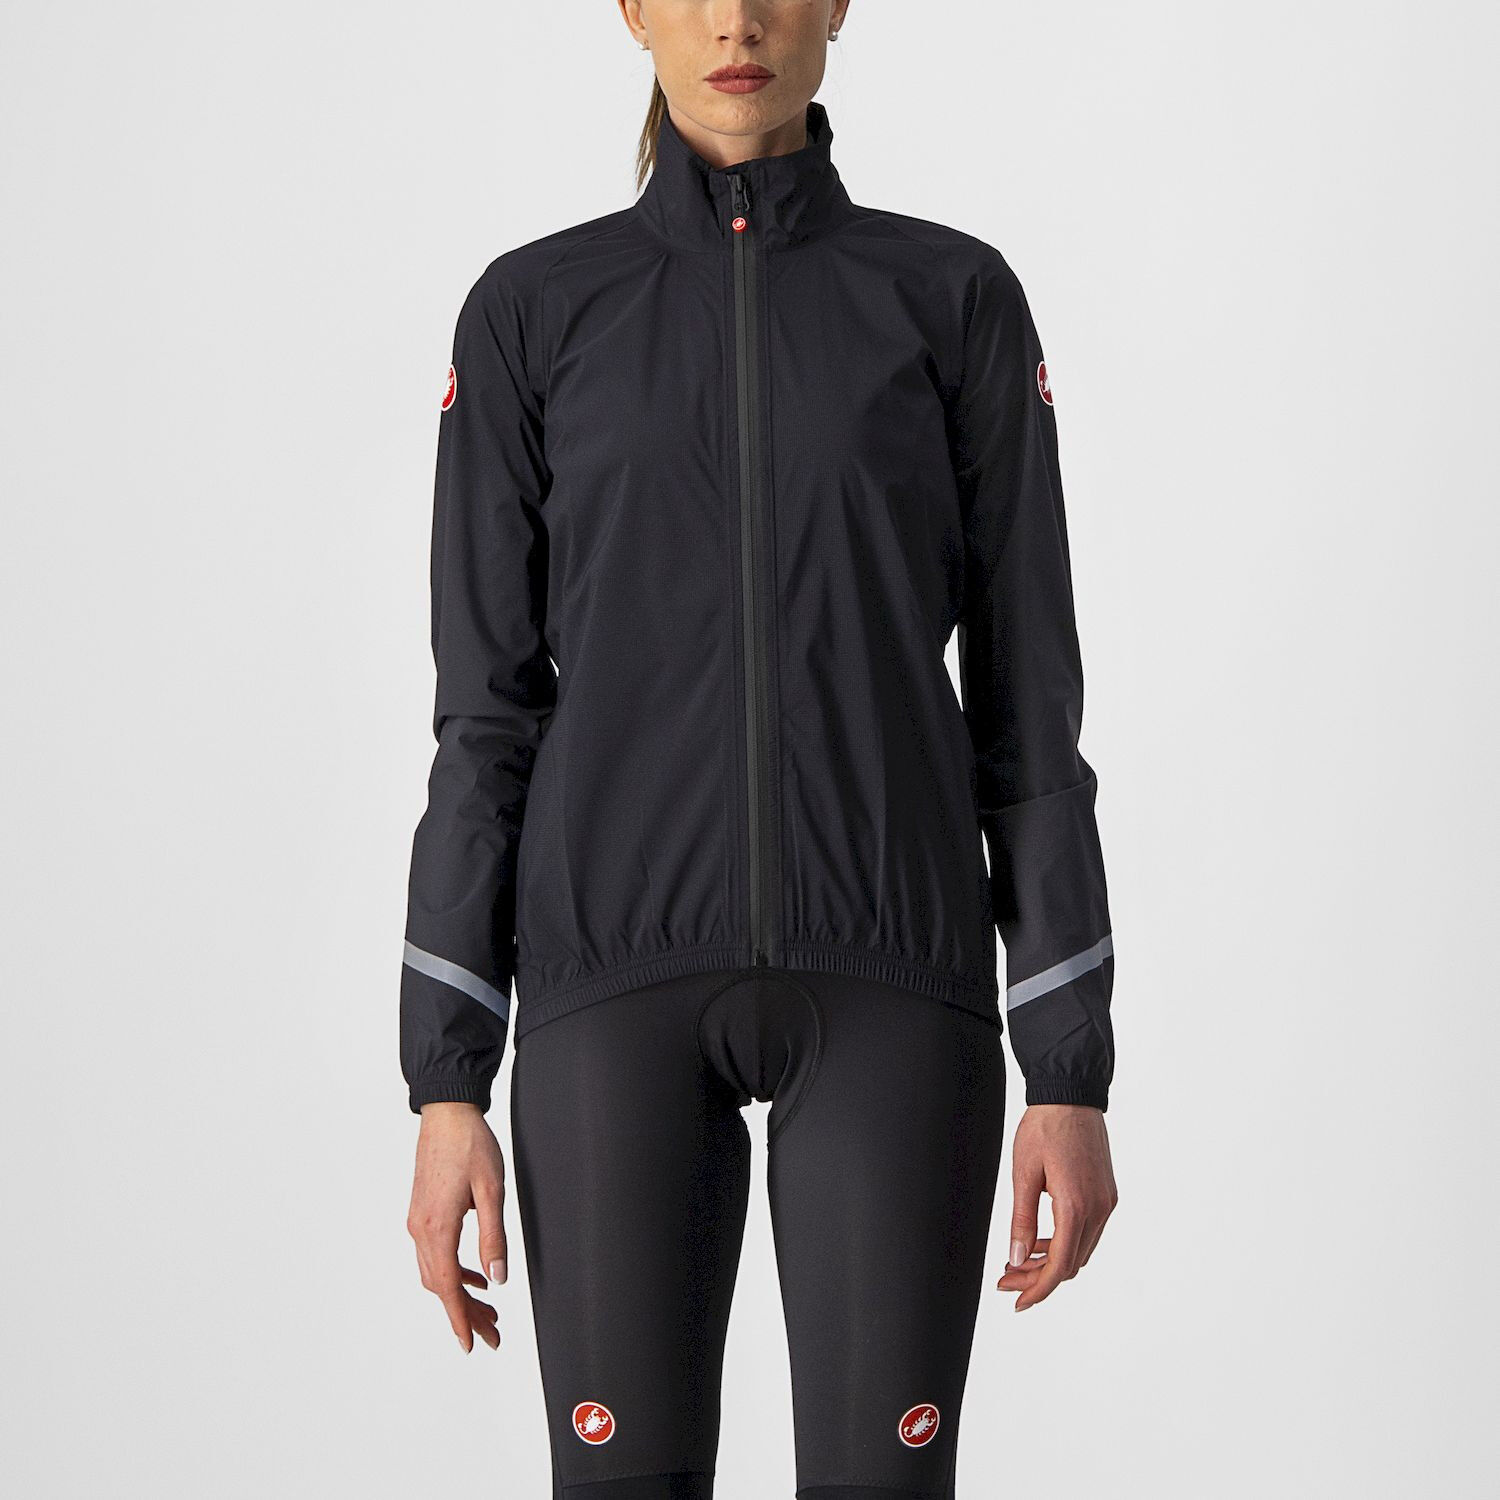 Castelli Emergency 2 Rain Jacket - Cycling jacket - Women's